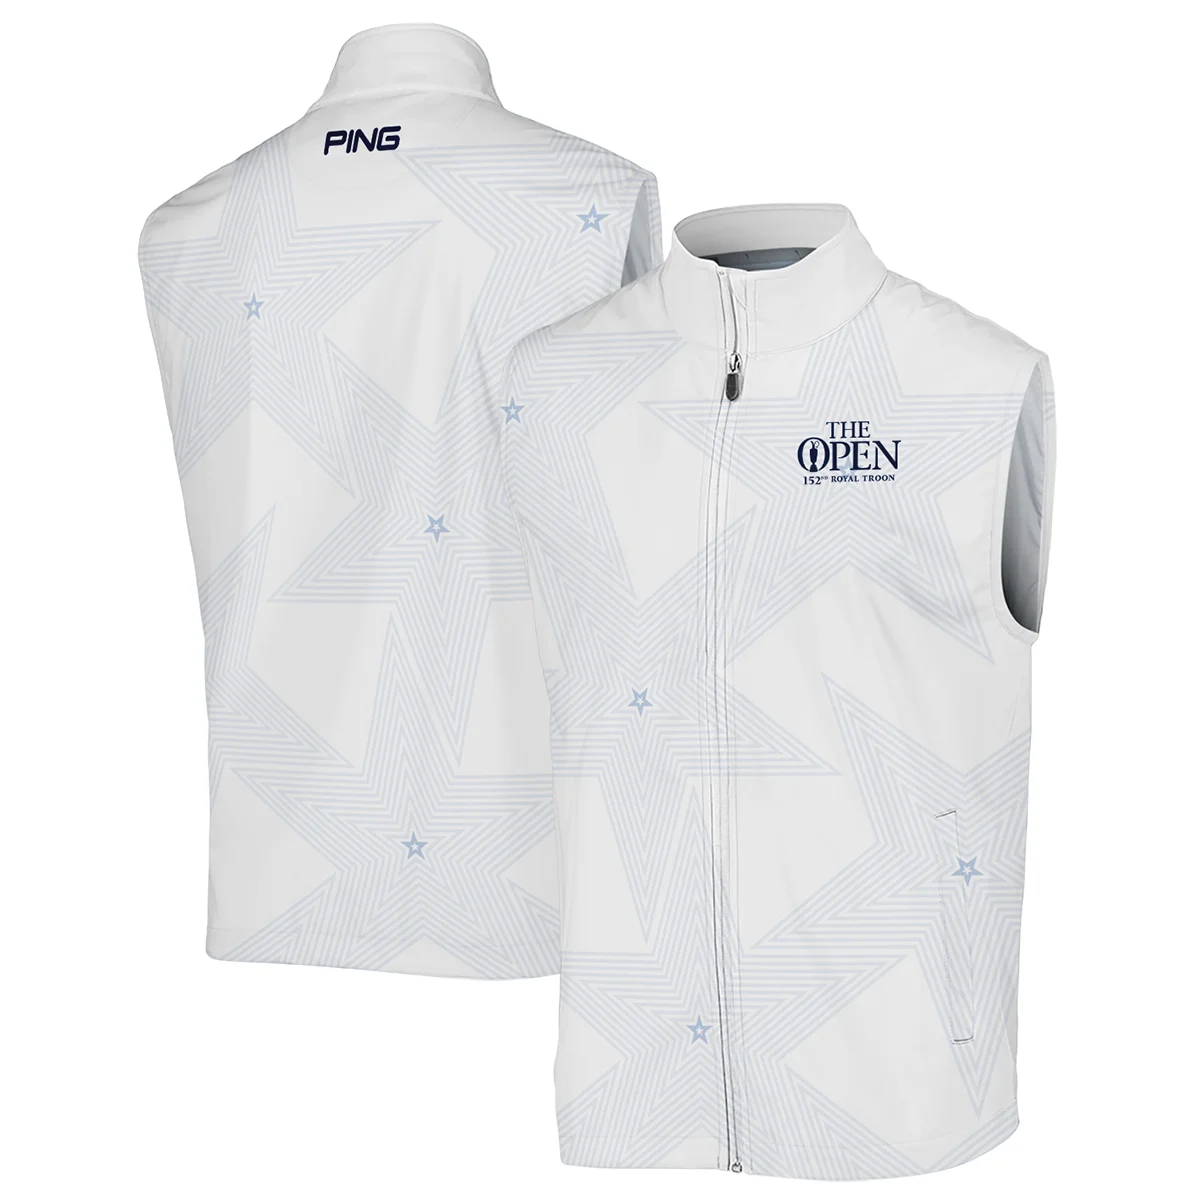 152nd The Open Championship Golf Ping Zipper Hoodie Shirt Stars White Navy Golf Sports All Over Print Zipper Hoodie Shirt